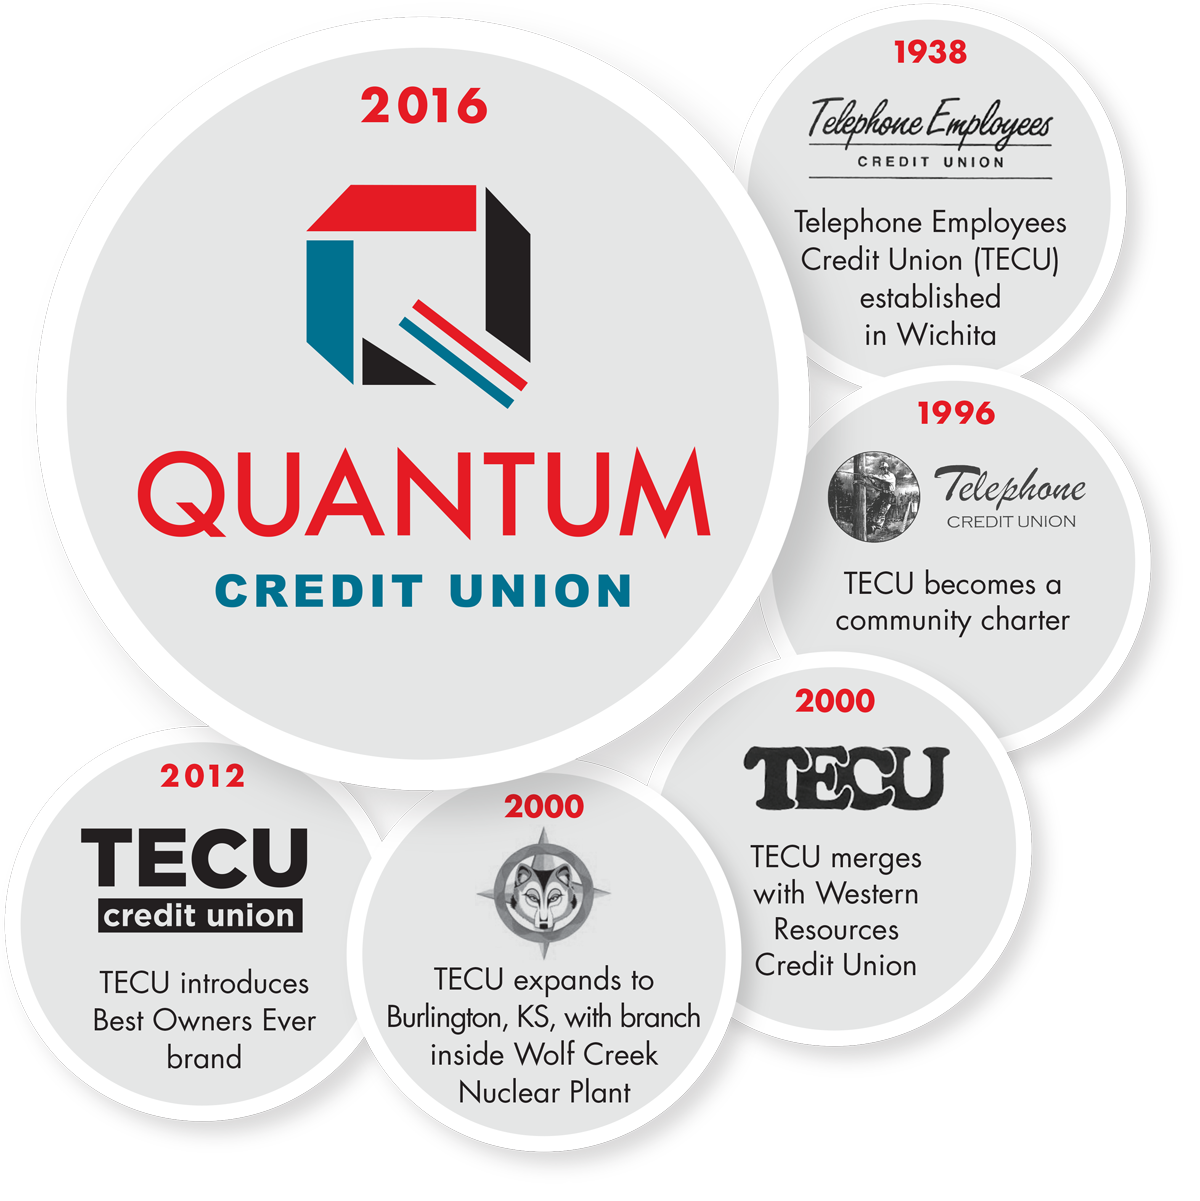 About Quantum Credit Union in Wichita Kansas